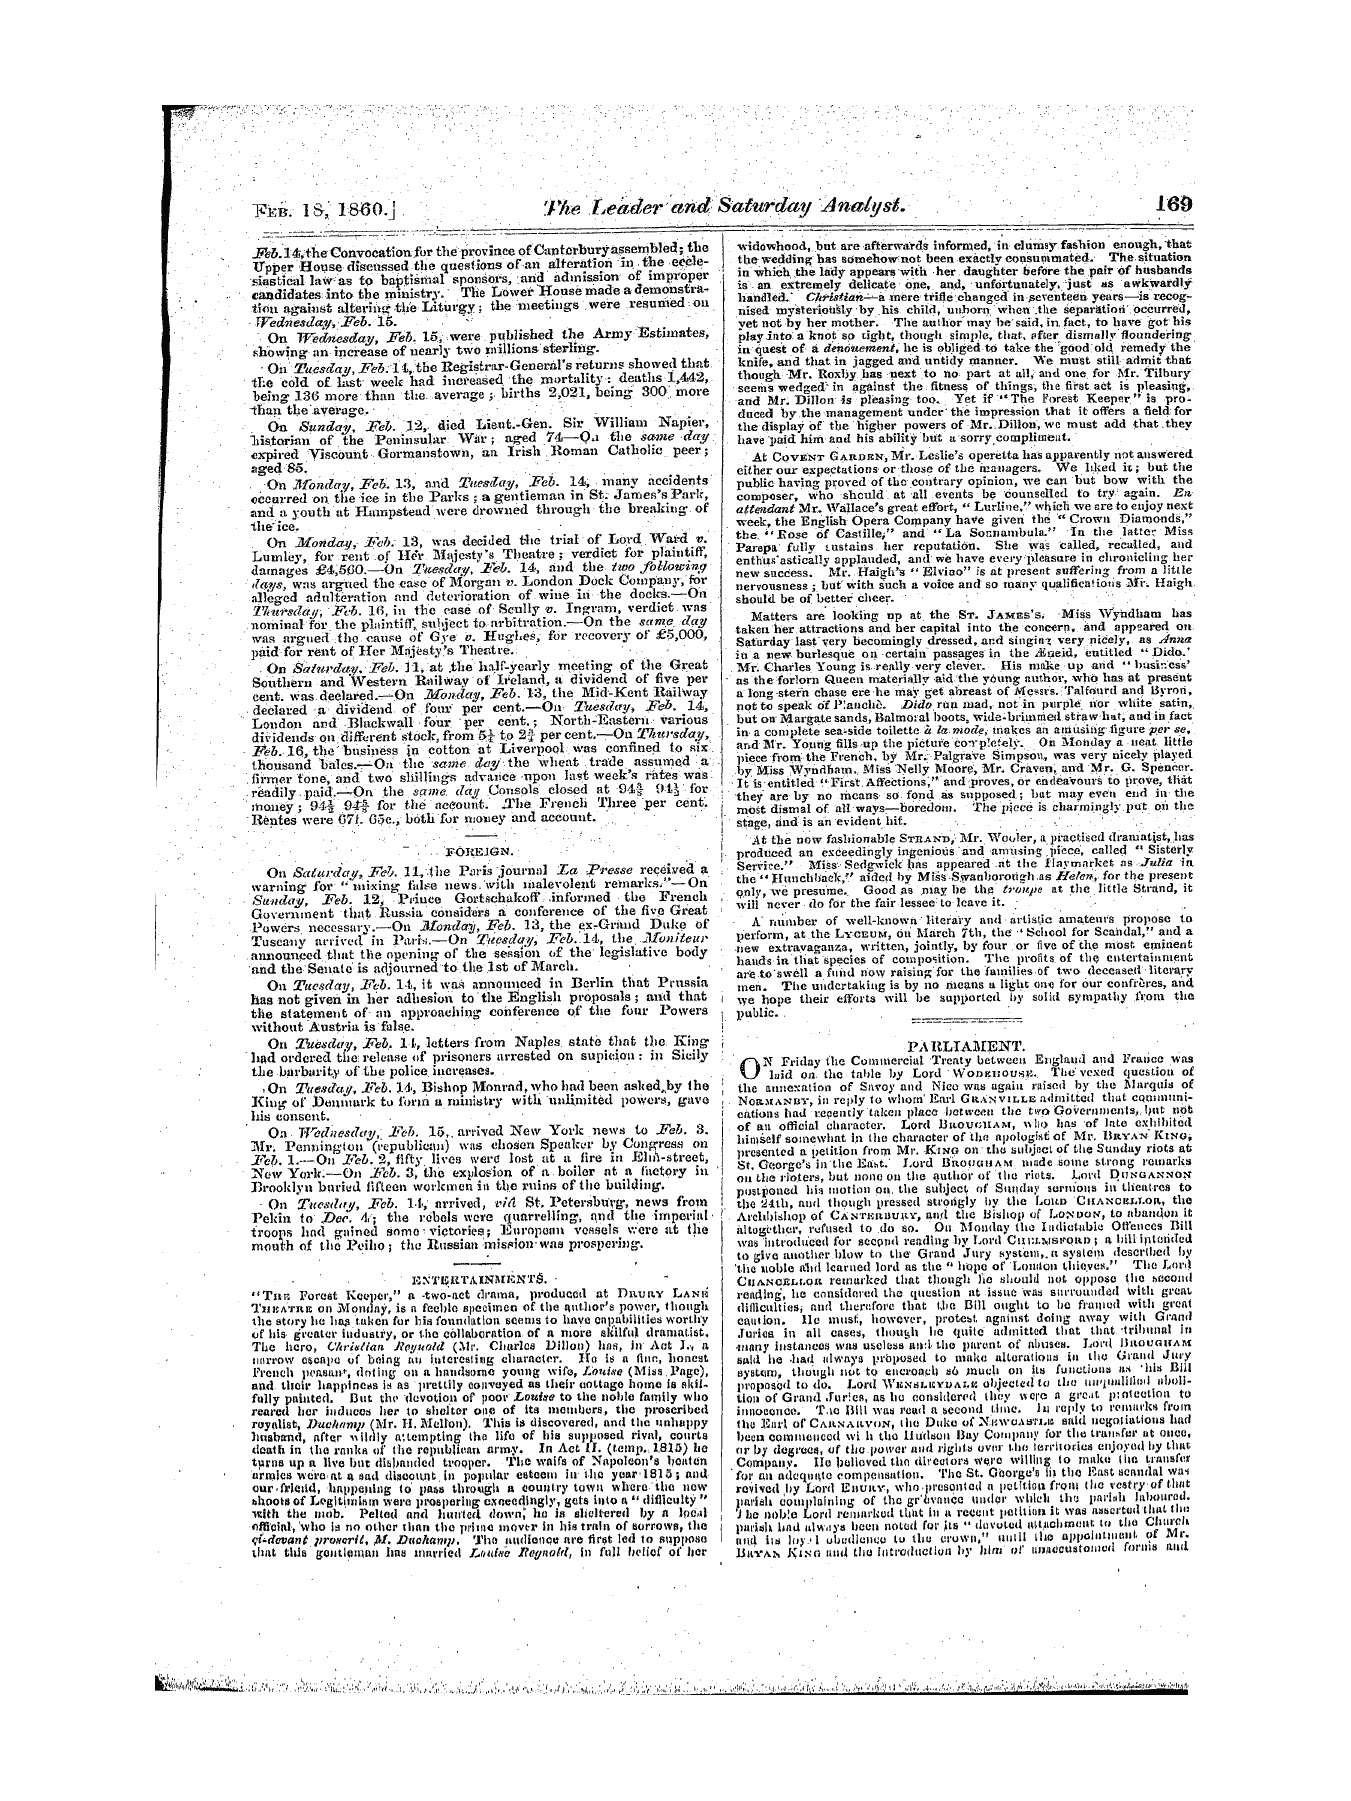 Leader (1850-1860): jS F Y, 1st edition - E.\Ti5utai3srarkntis.